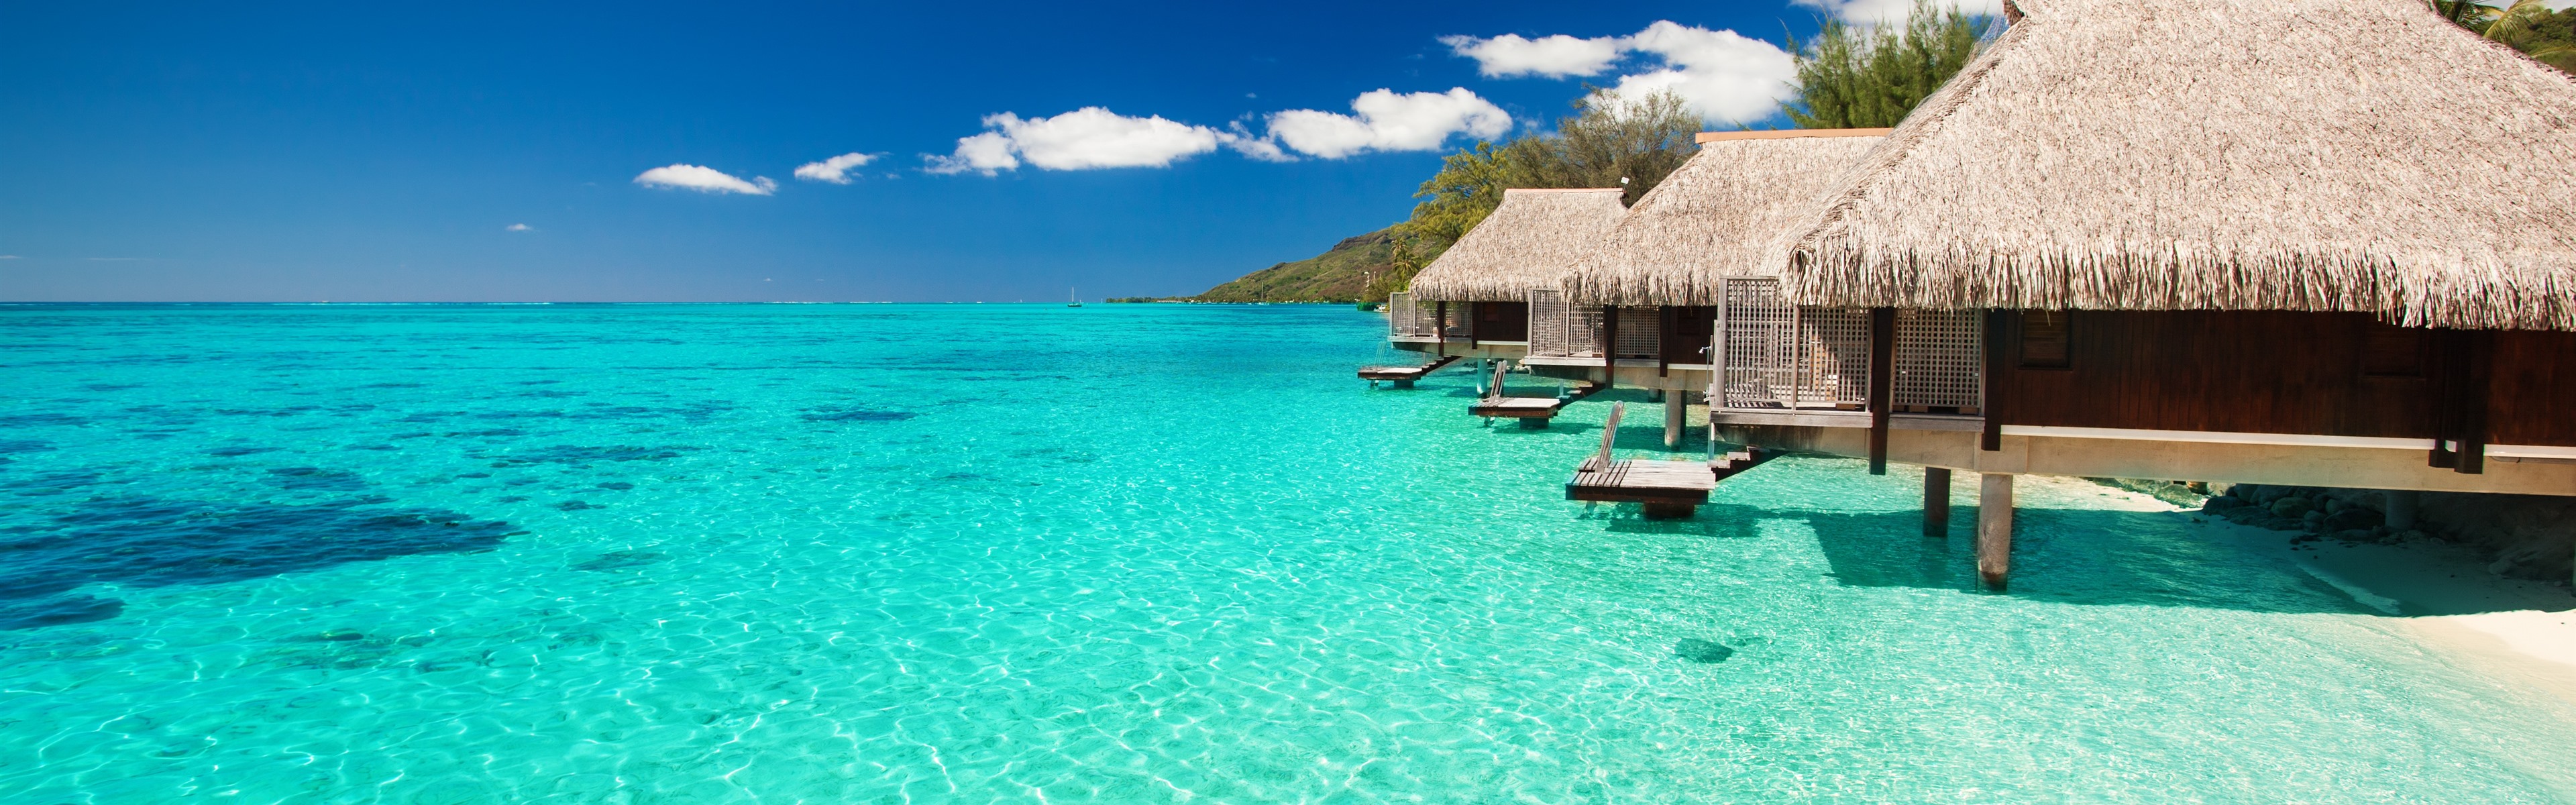 Maldives, bungalows, blue sea, resort, tropical 1242x2688 iPhone XS